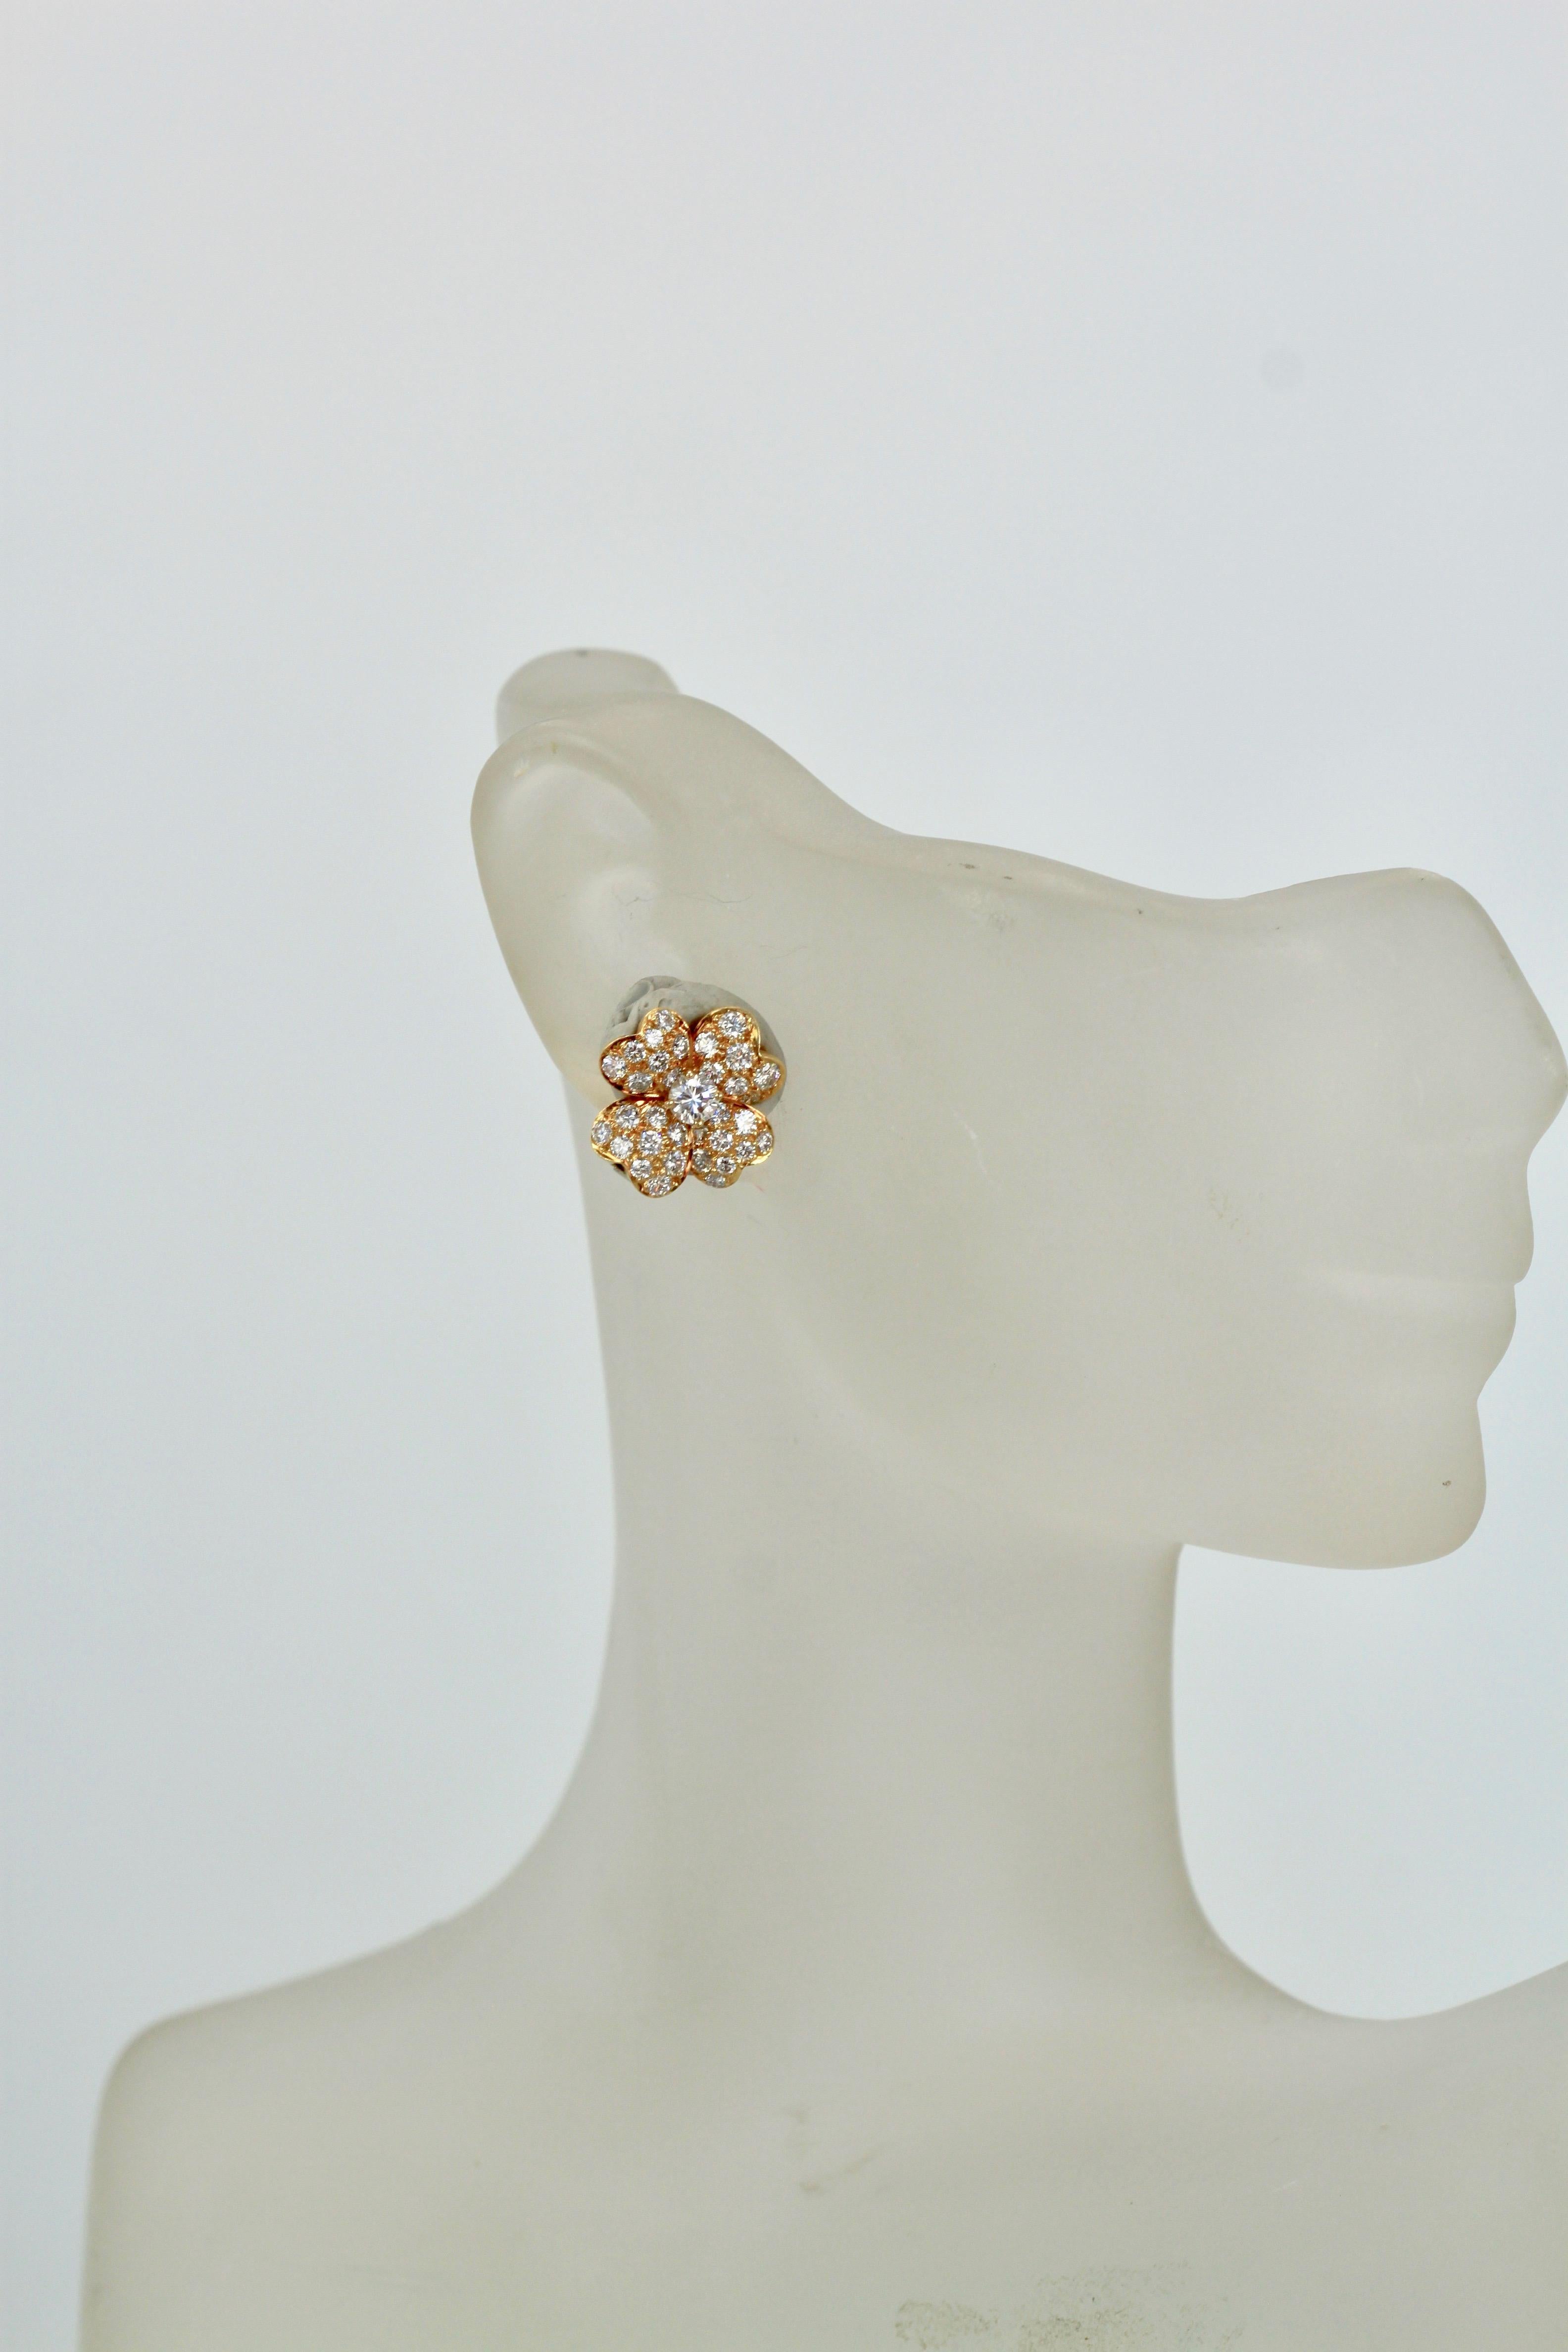 Van Cleef Cosmos Diamond Earrings Small 18 Karat Yellow Gold 2